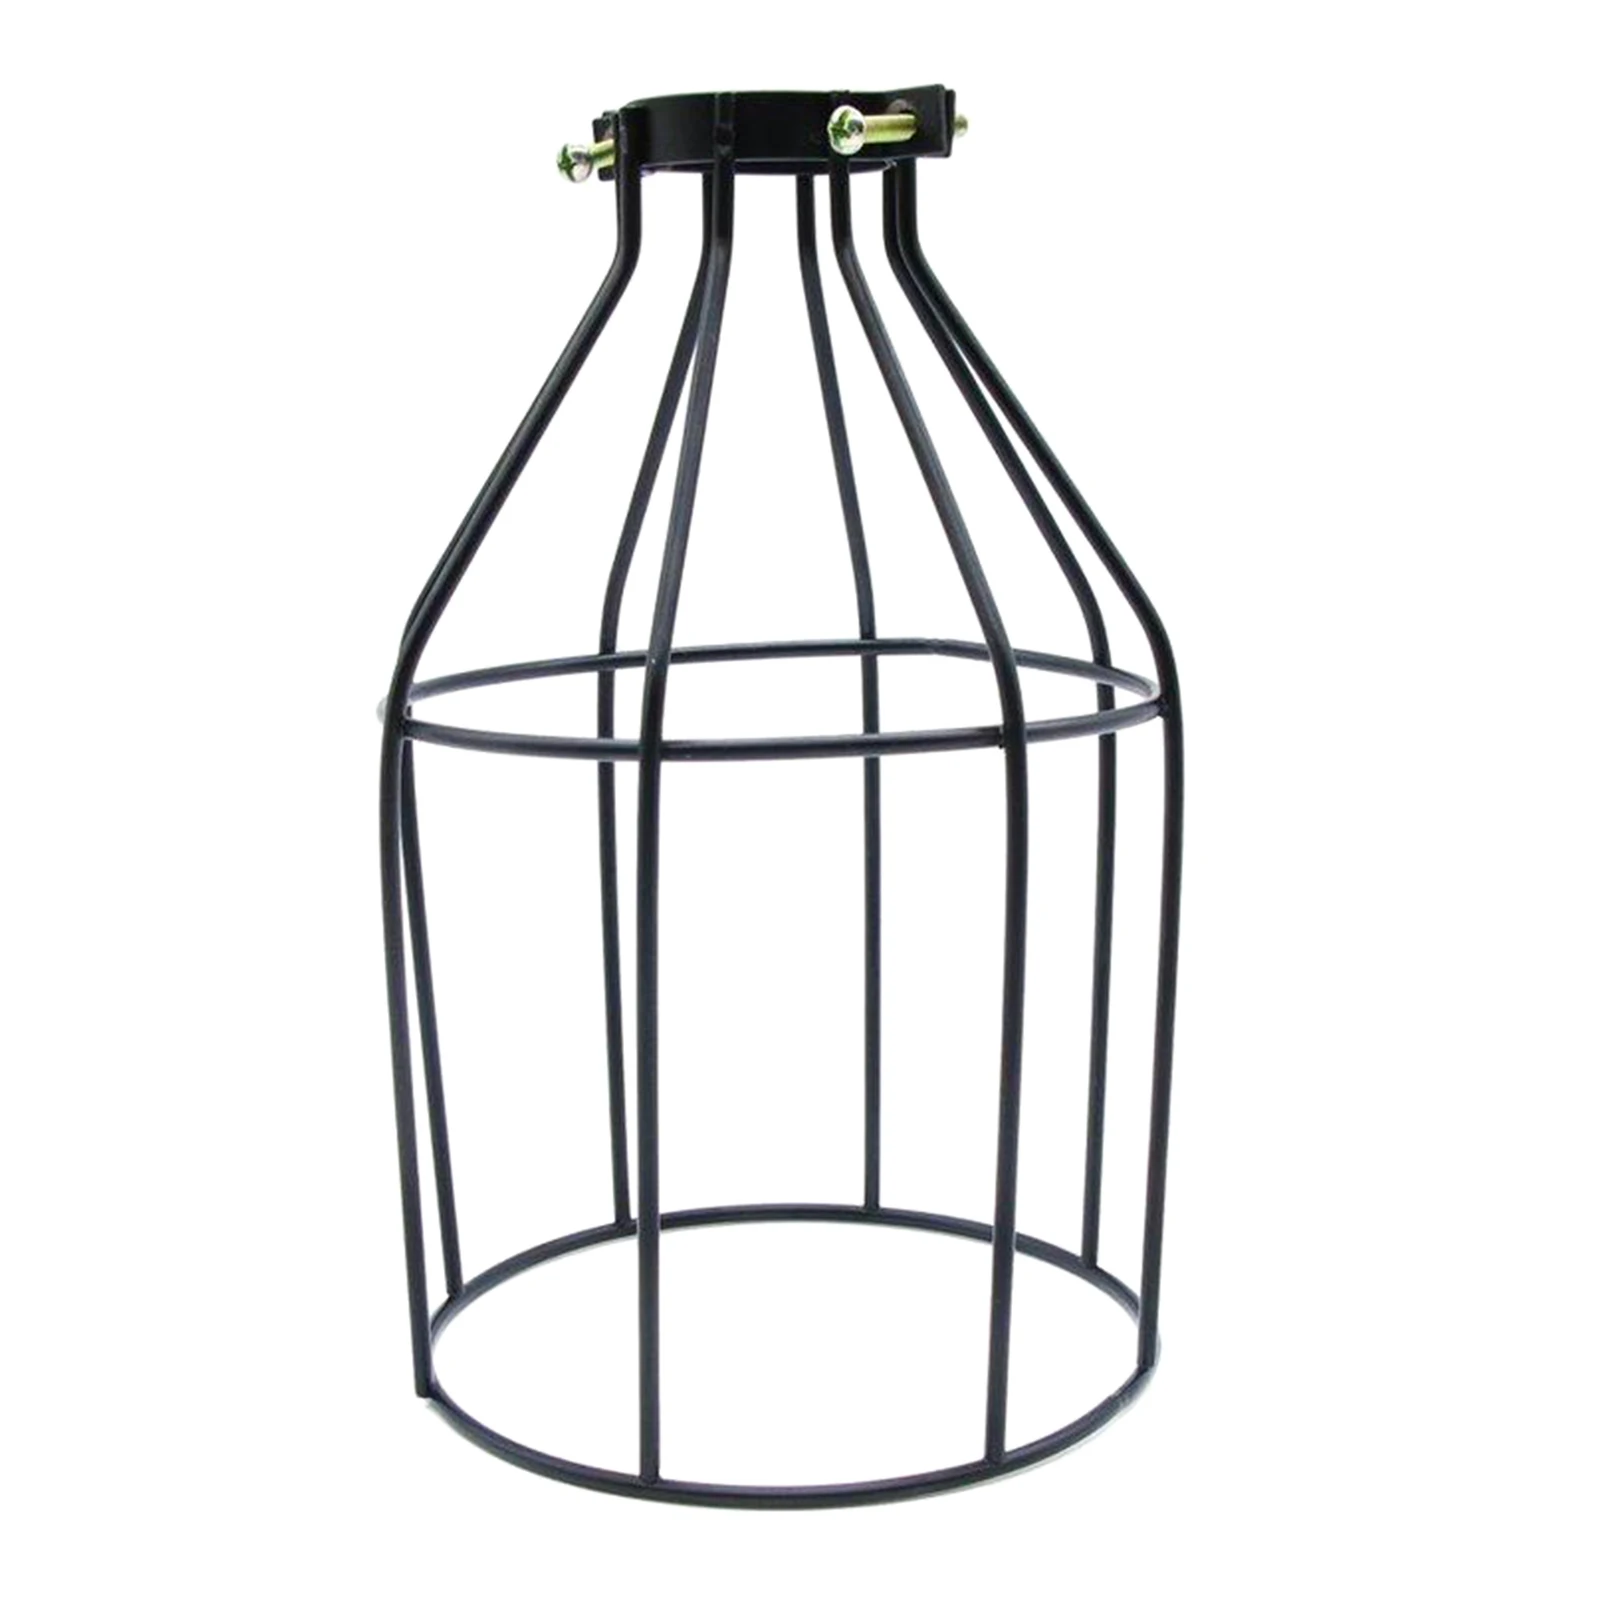 Pendant Light Shade Retro Style Industrial Metal Bird Basket Cage Light Cover